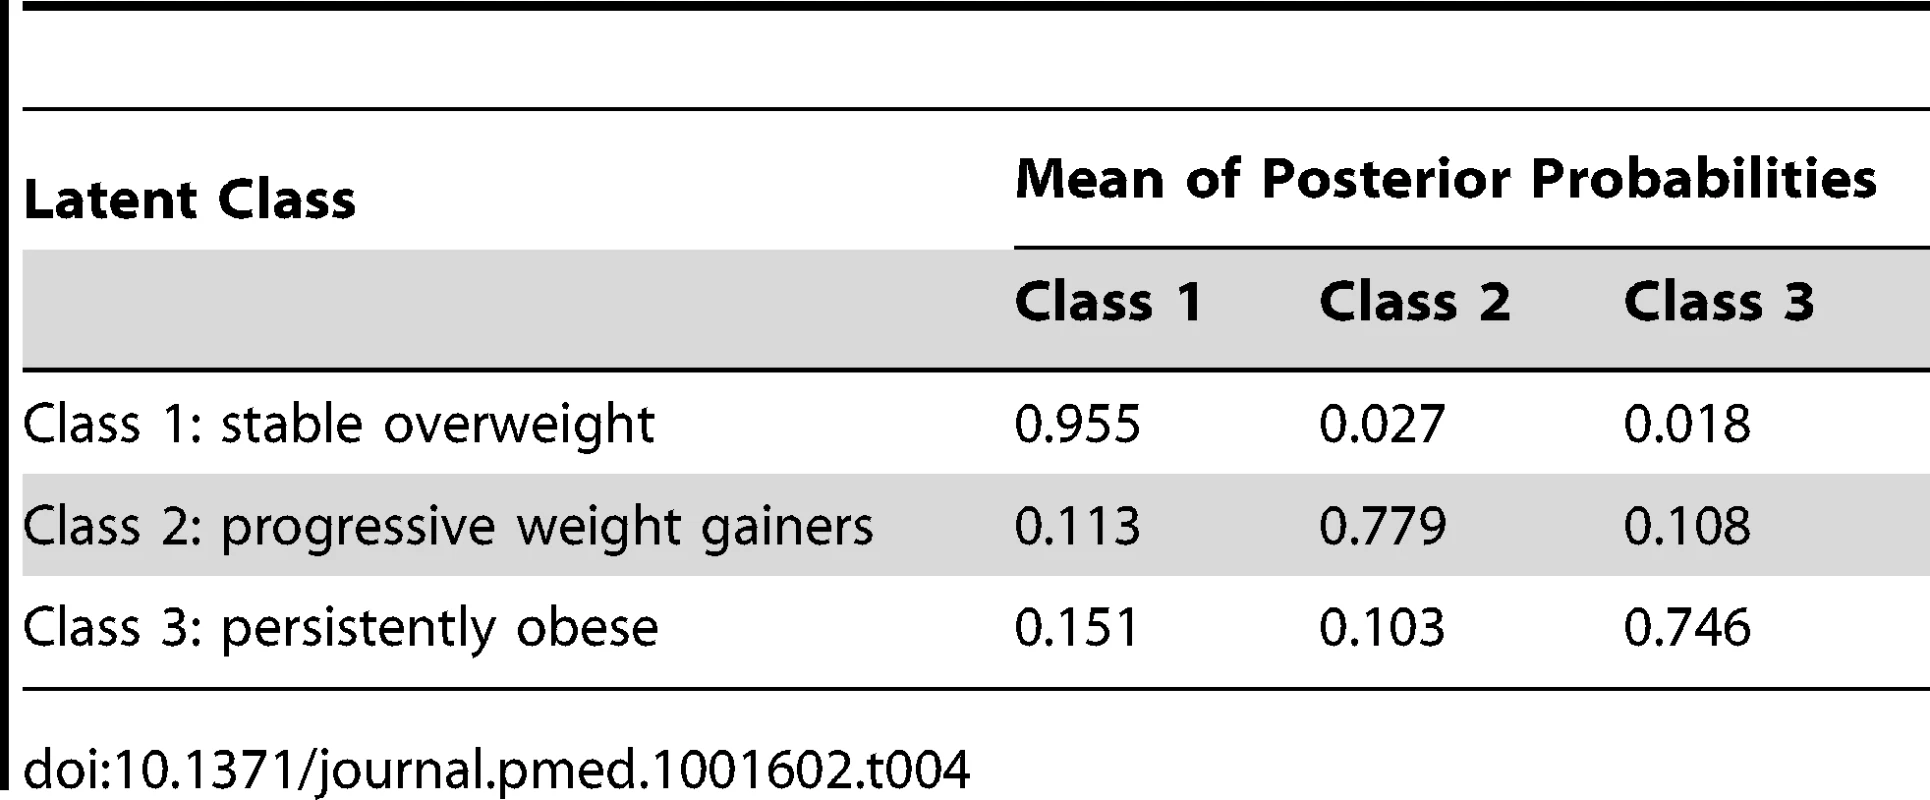 &lt;b&gt;Average class probabilities by latent classes.&lt;/b&gt;